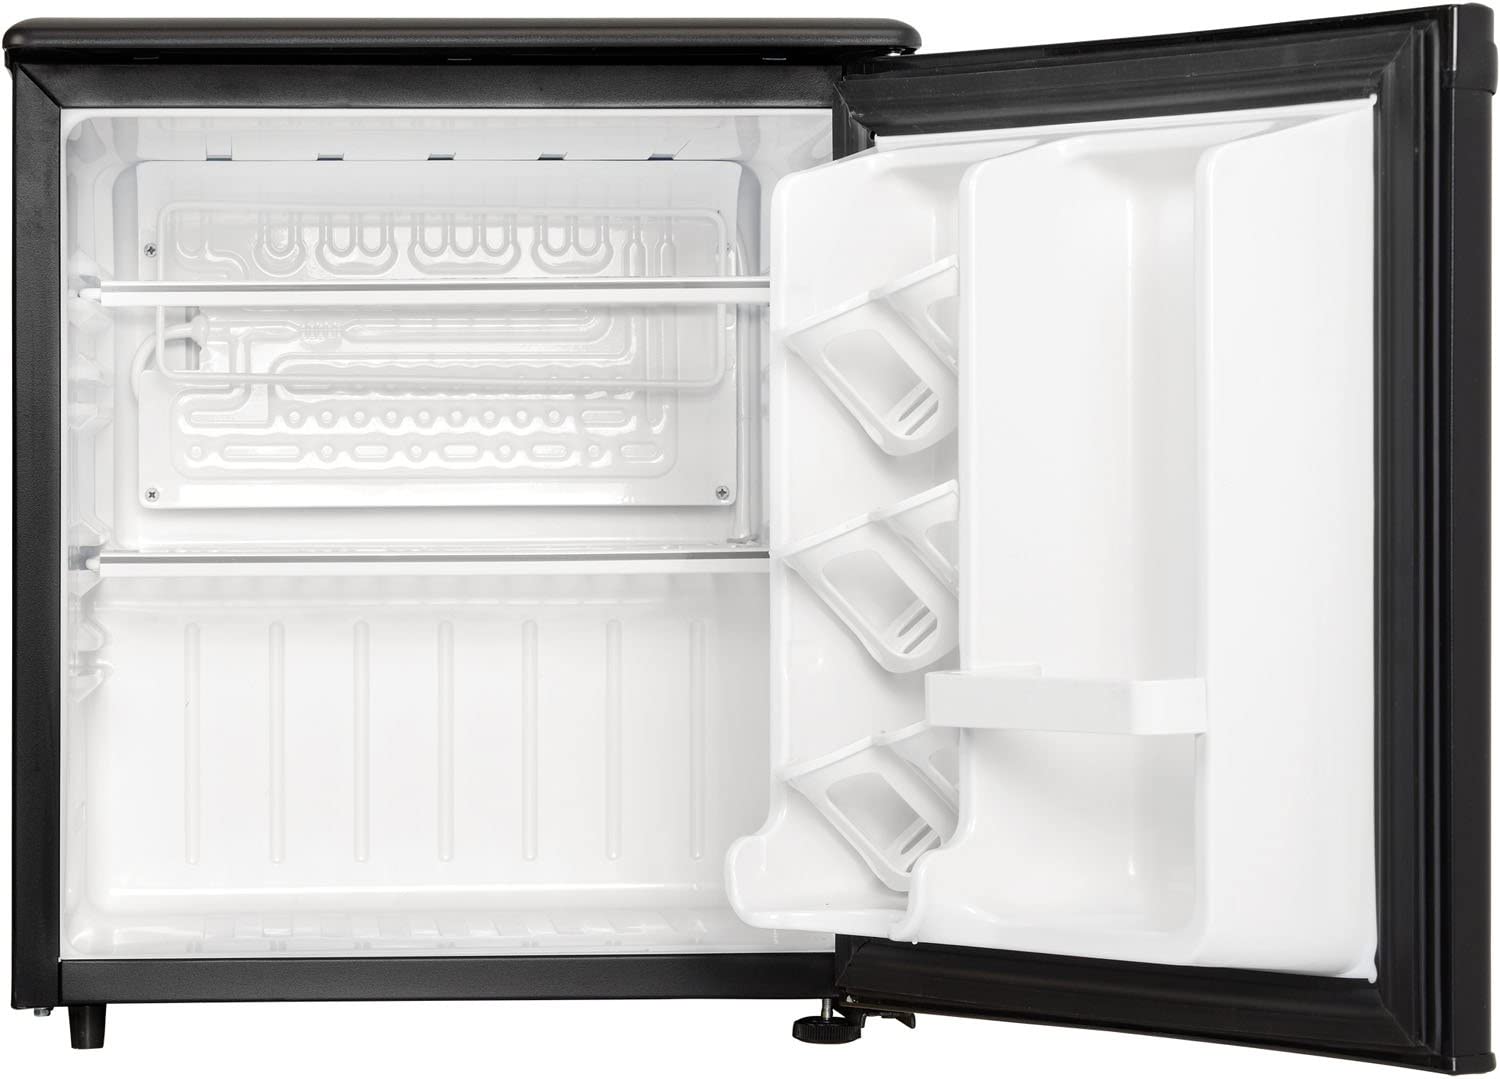 Restored Danby Designer 1.7 cu. ft. Compact Refrigerator (DAR017A2BDD), Black-Factory Refurbished